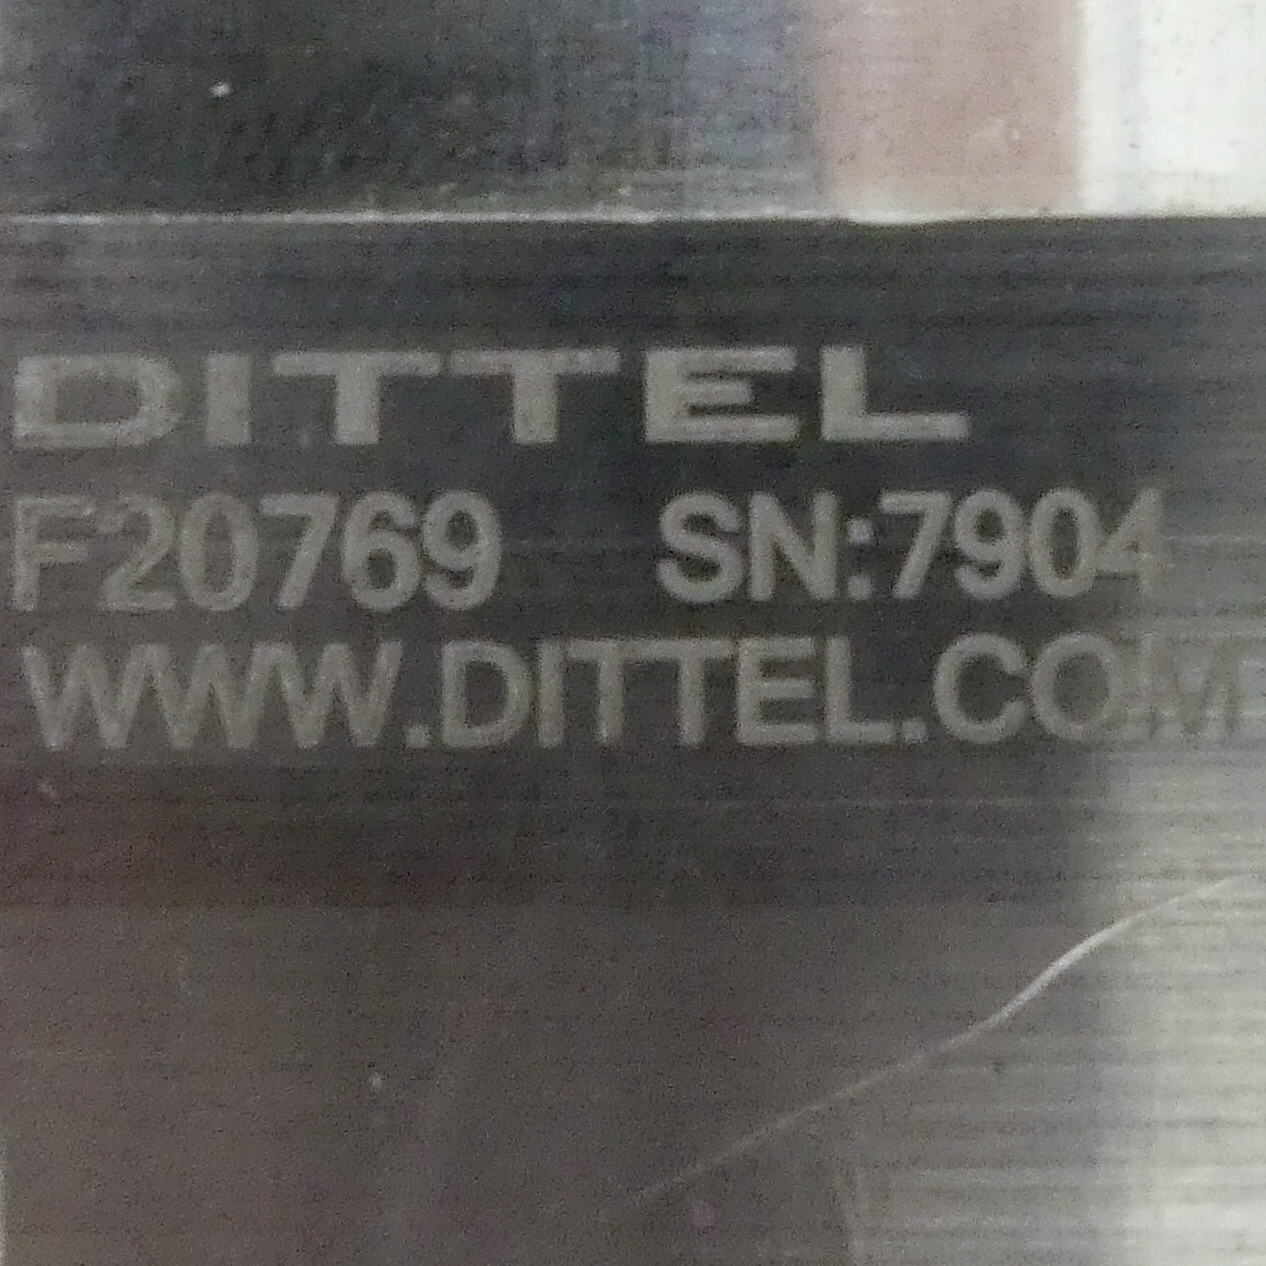 Dittel receiver 